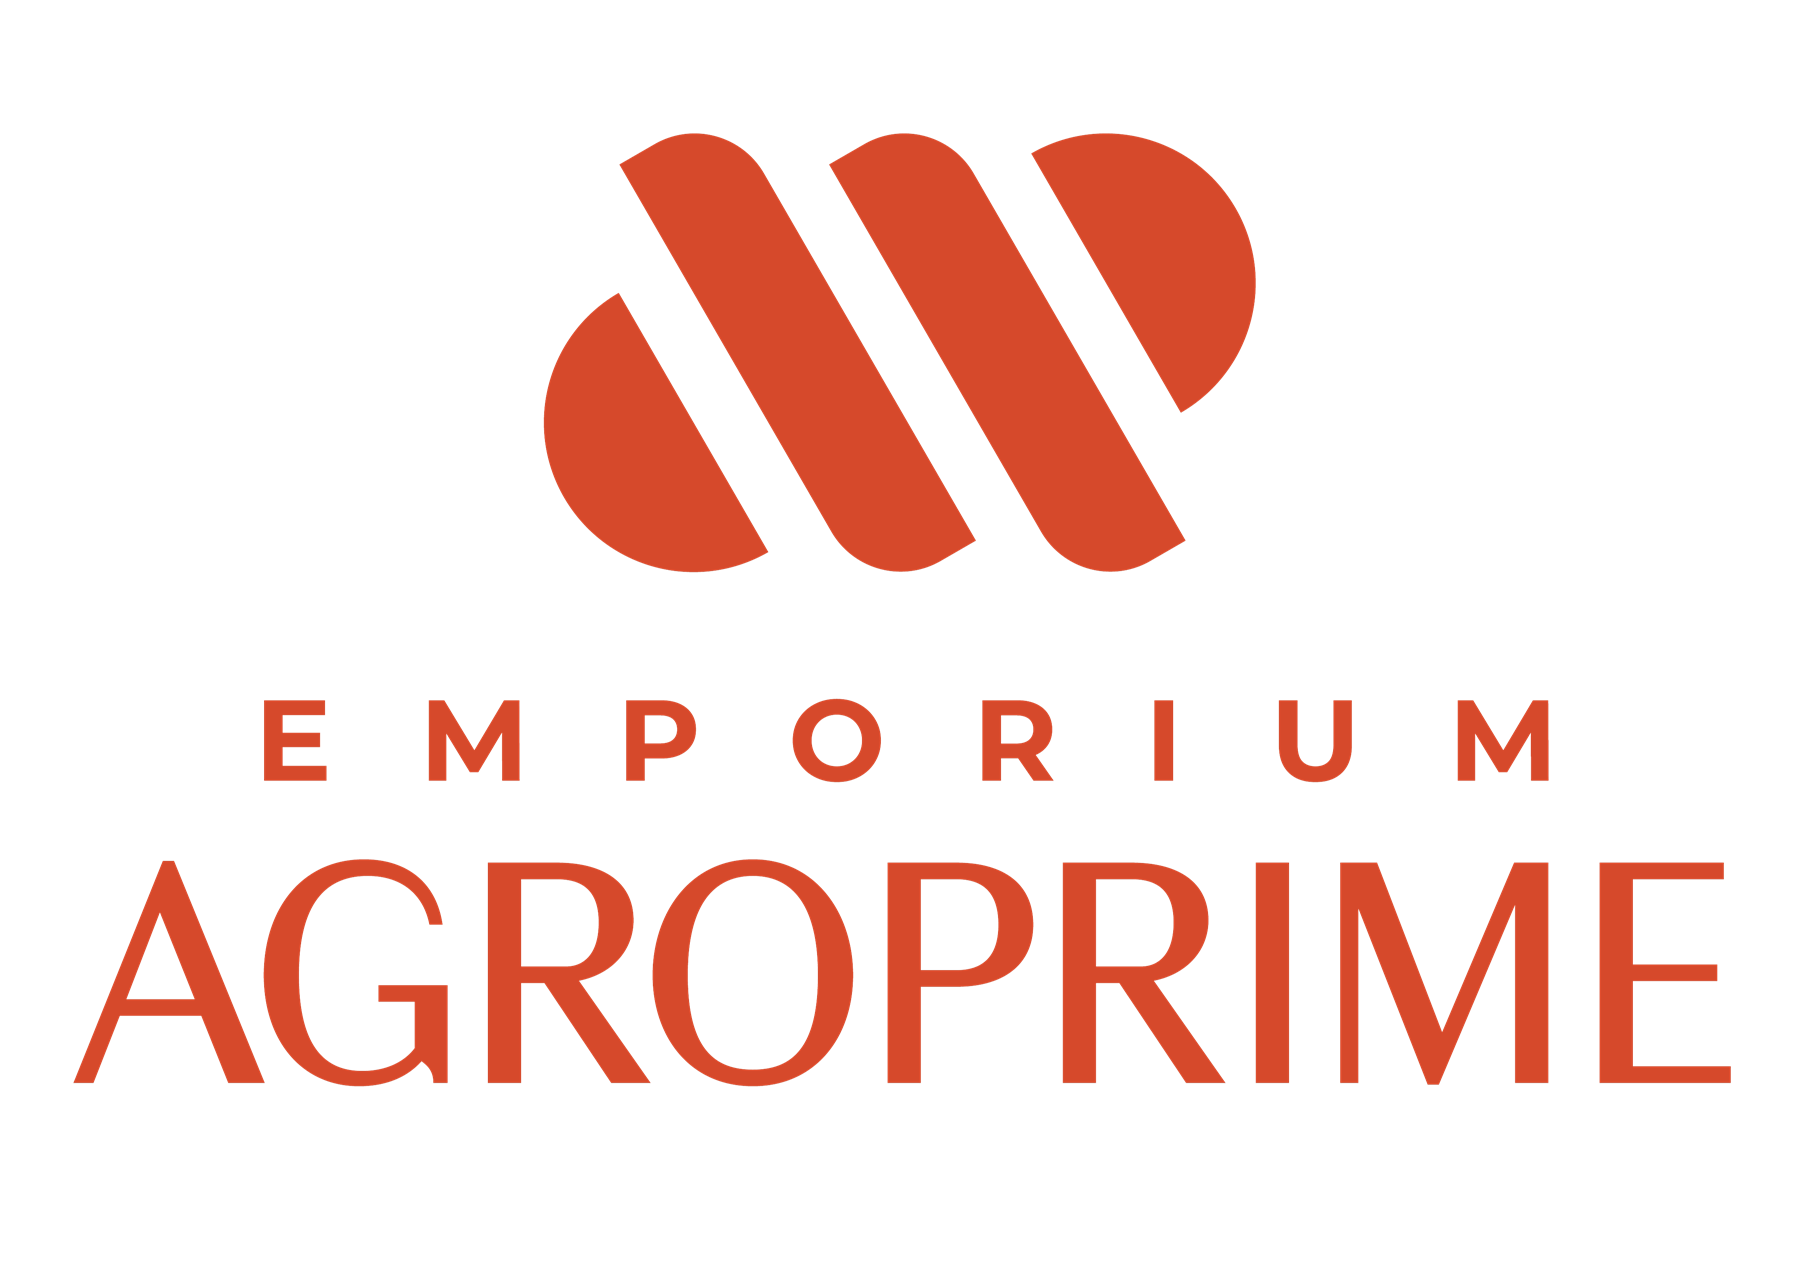 Agroprime